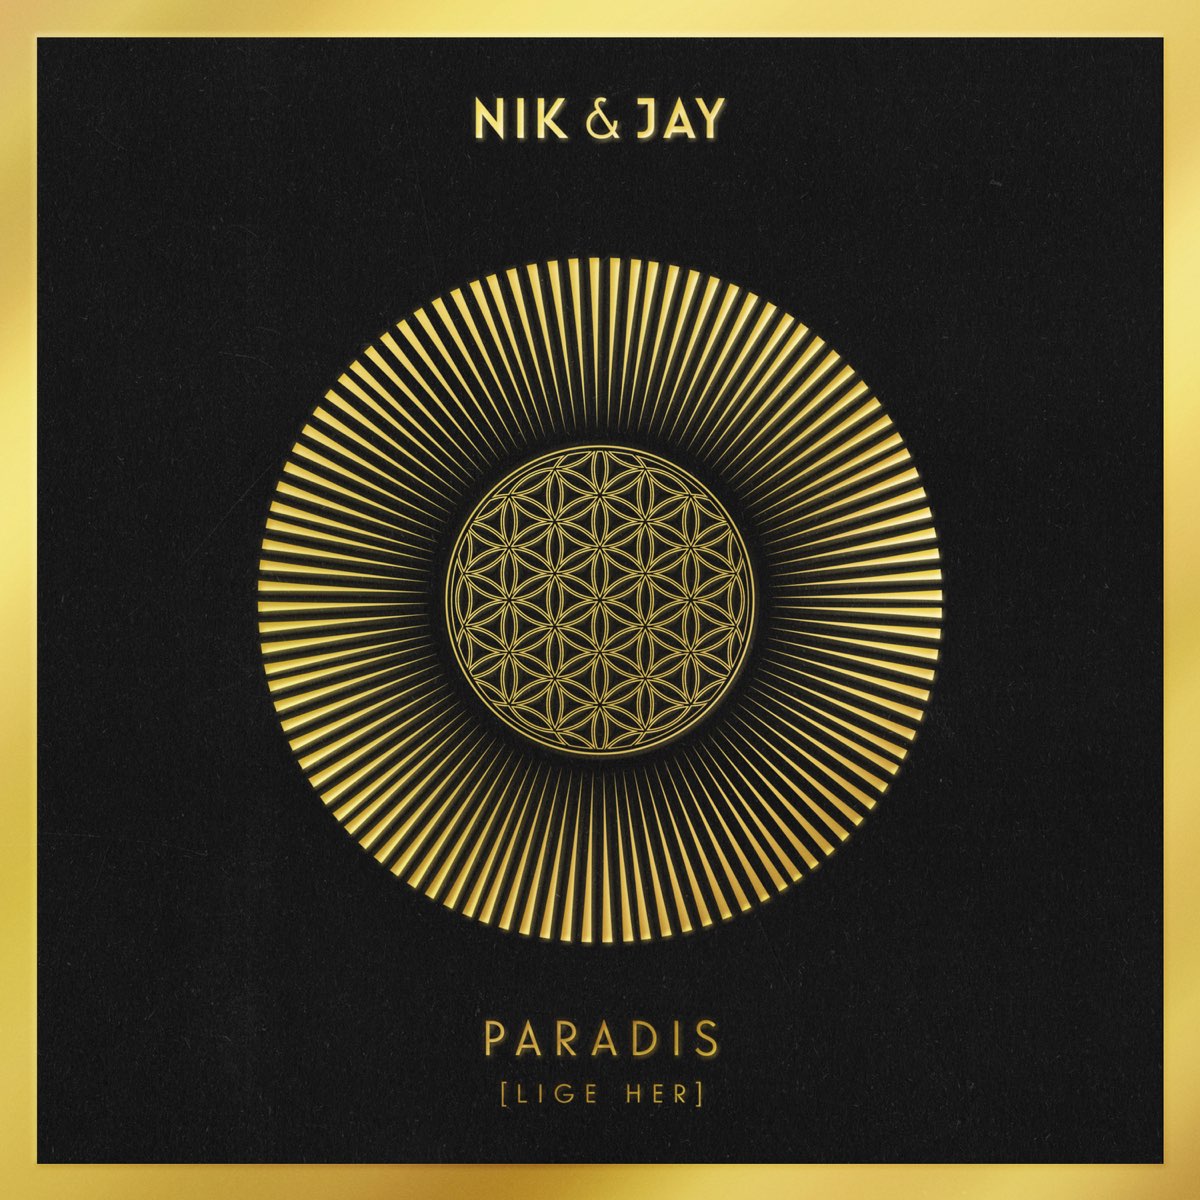 Paradis (Lige Her) - Single by Nik Jay on Apple Music